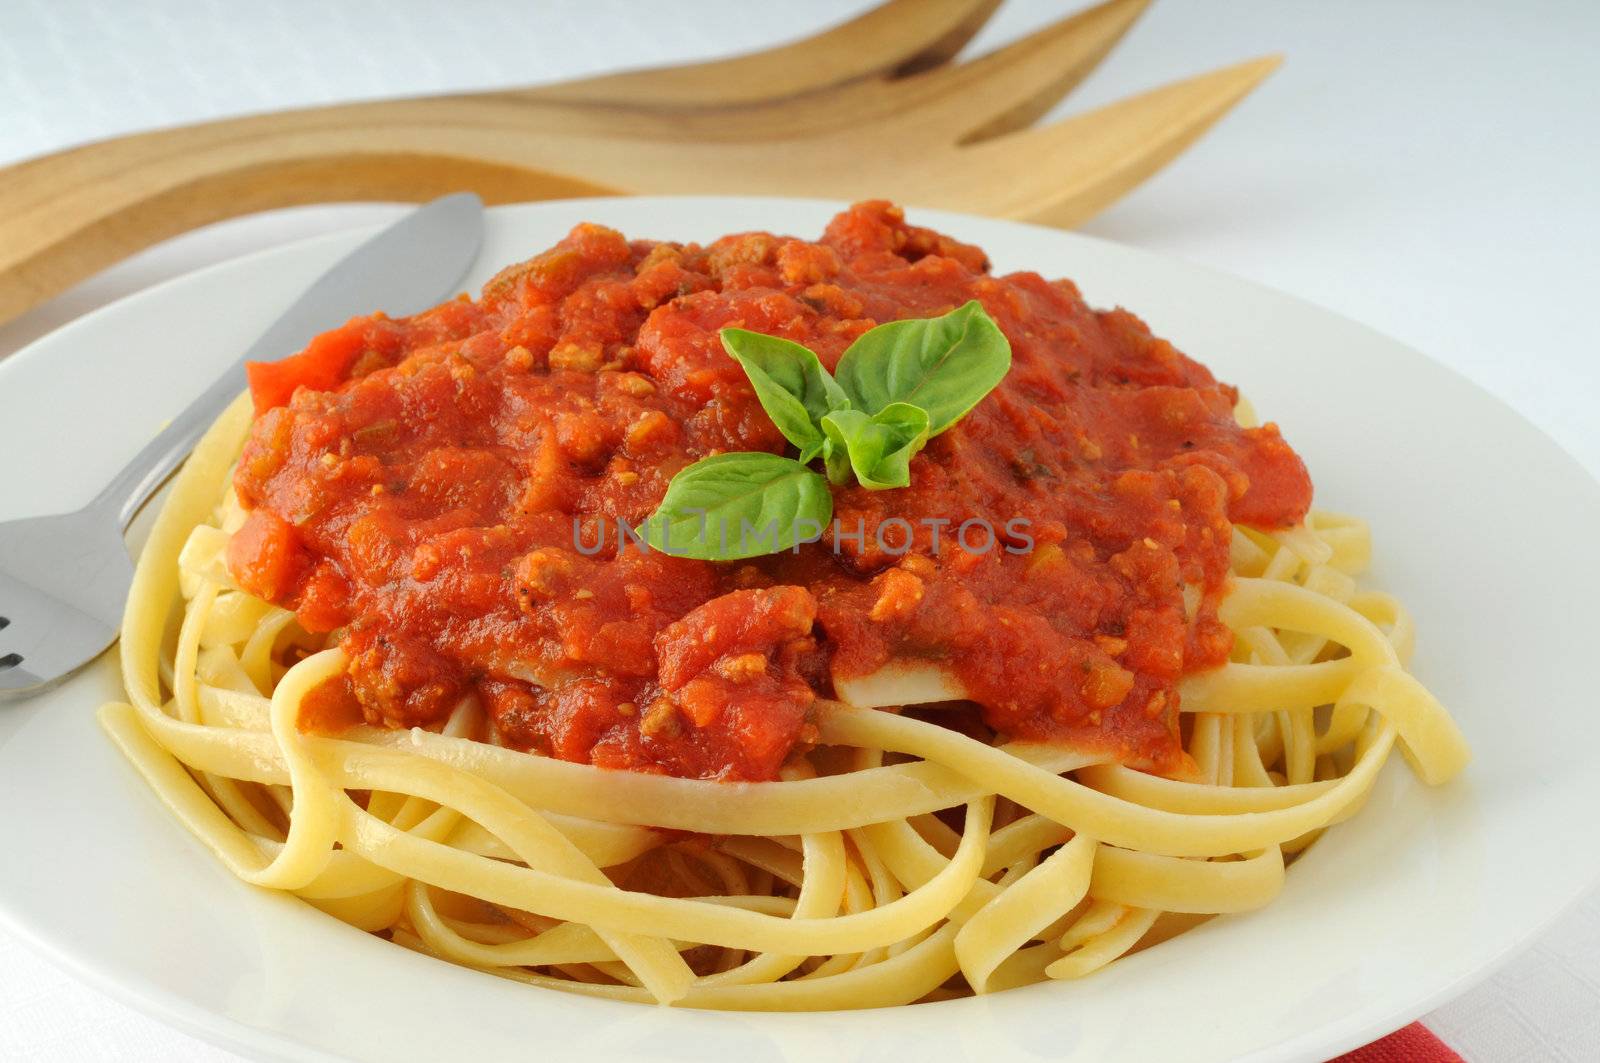 Linguine pasta with a tasty tomato basil sauce.